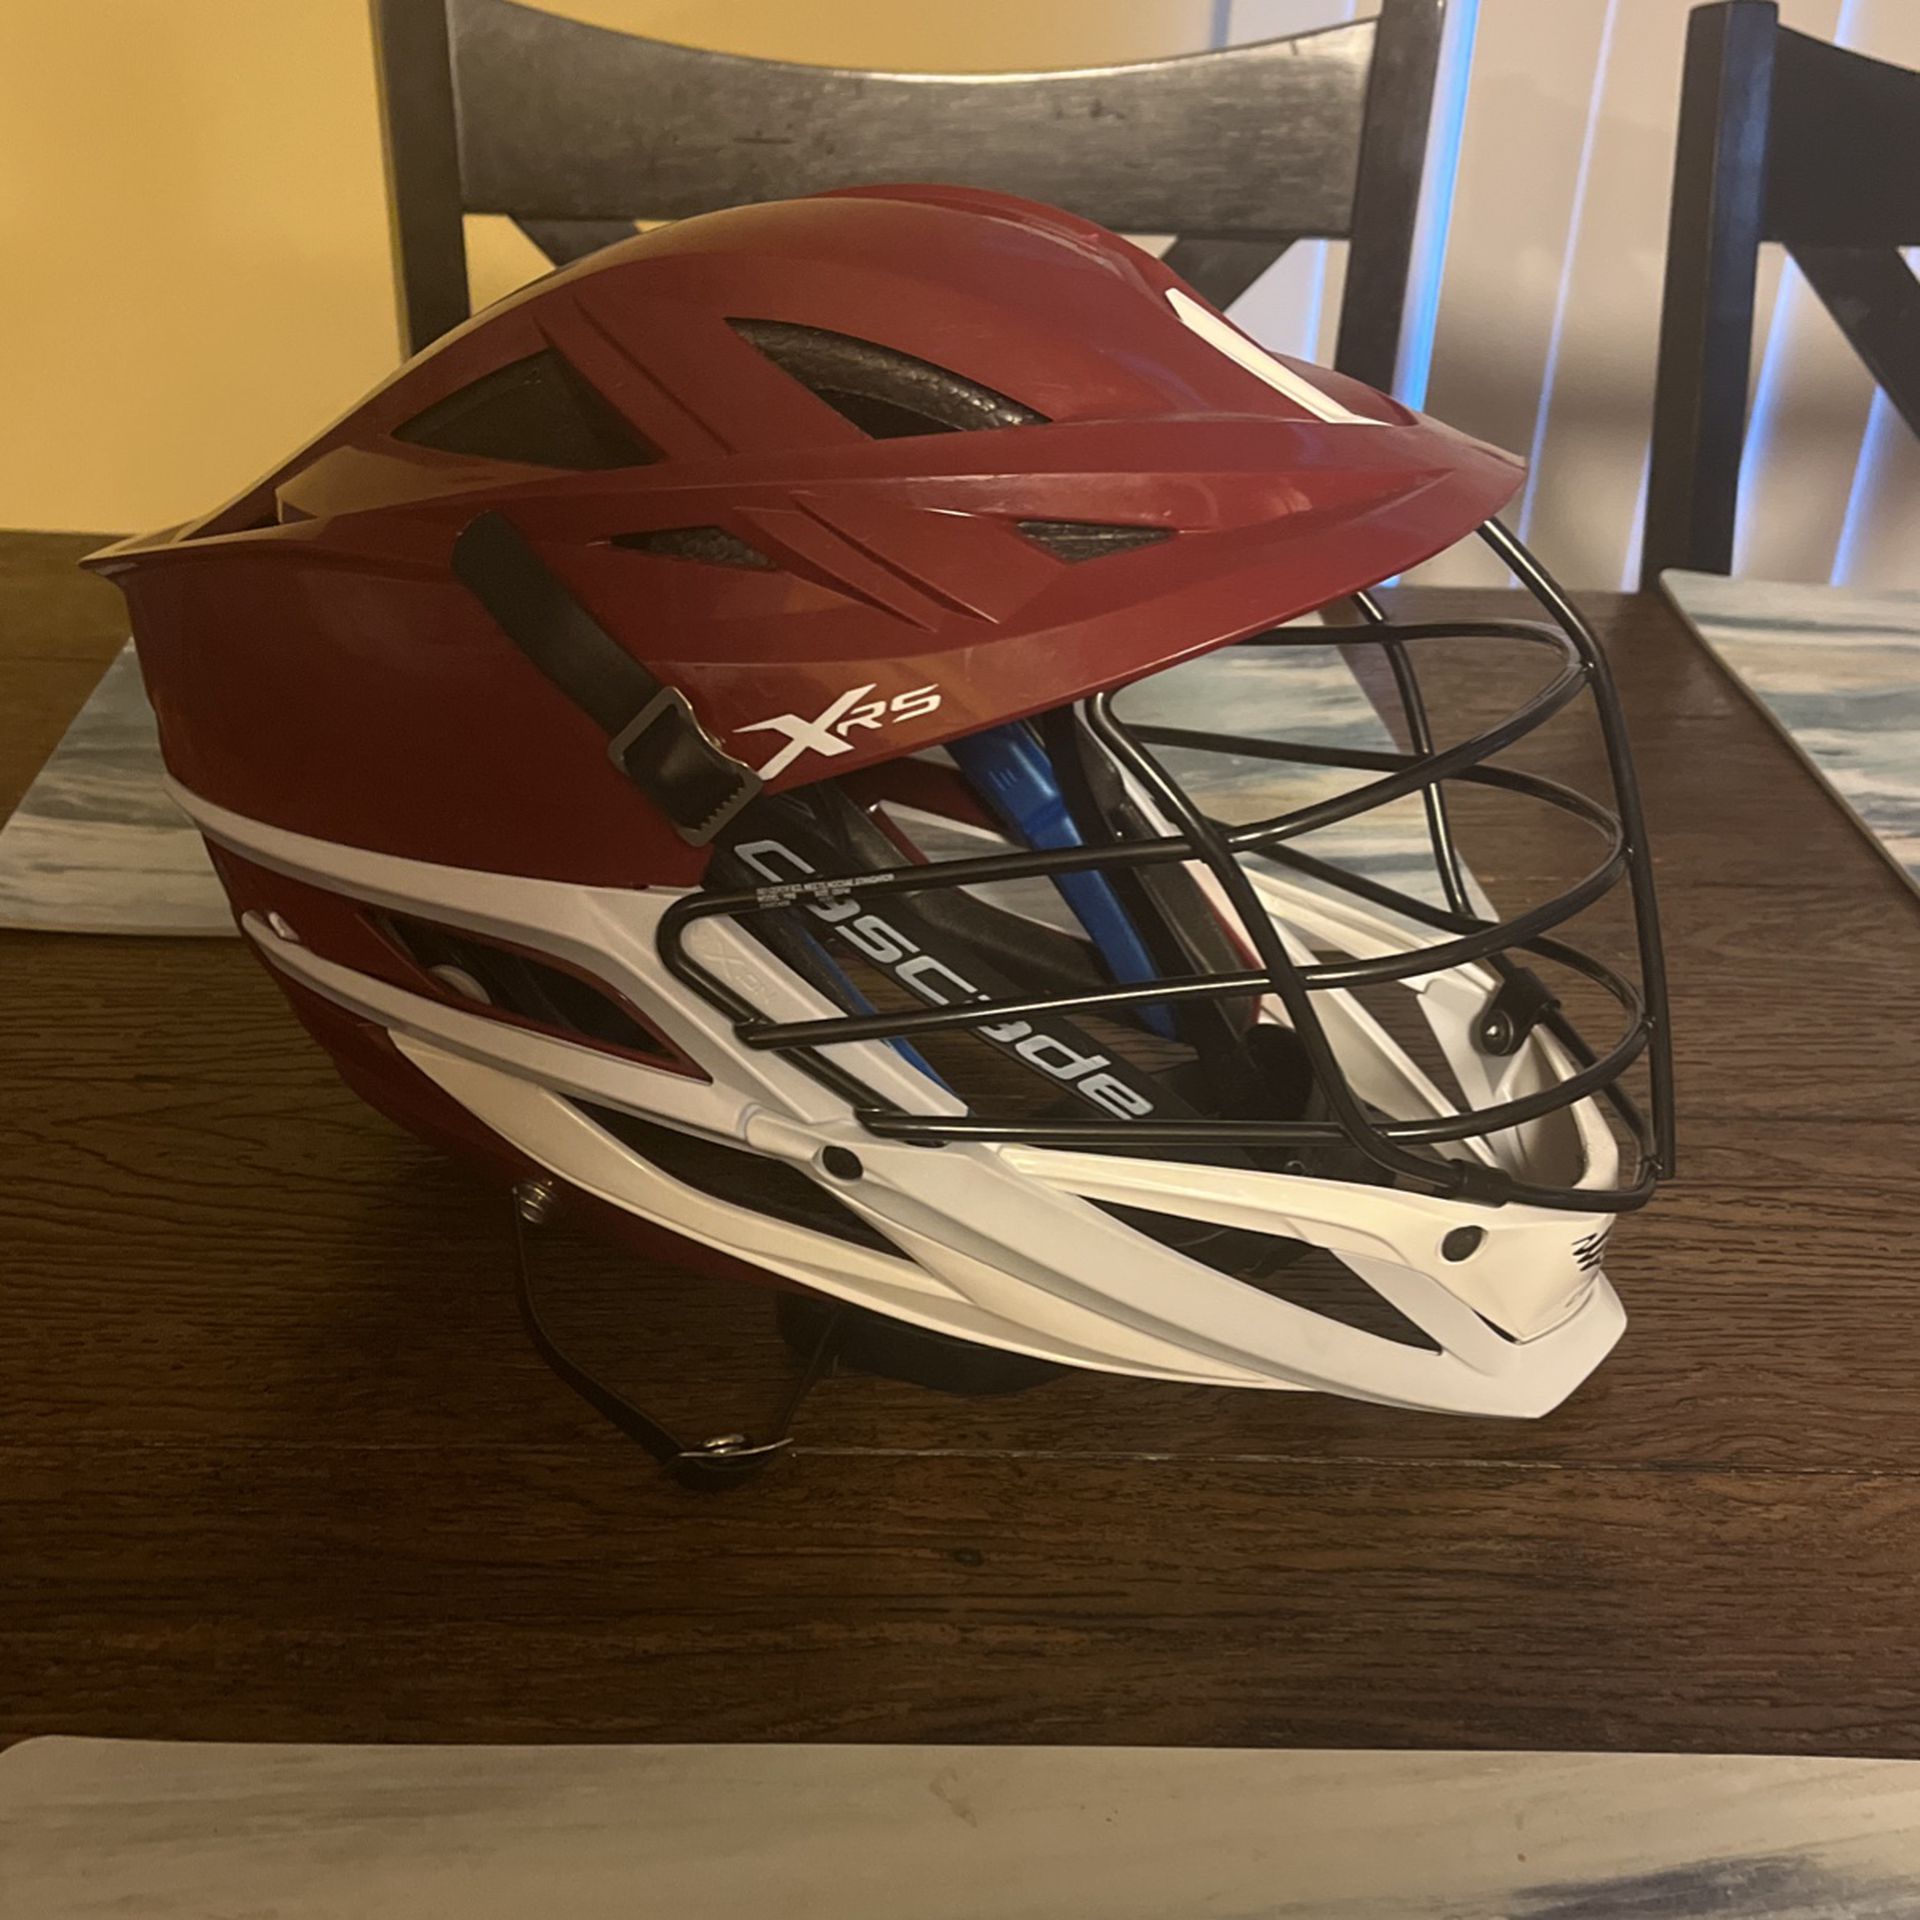  XRS Lacrosse helmet 